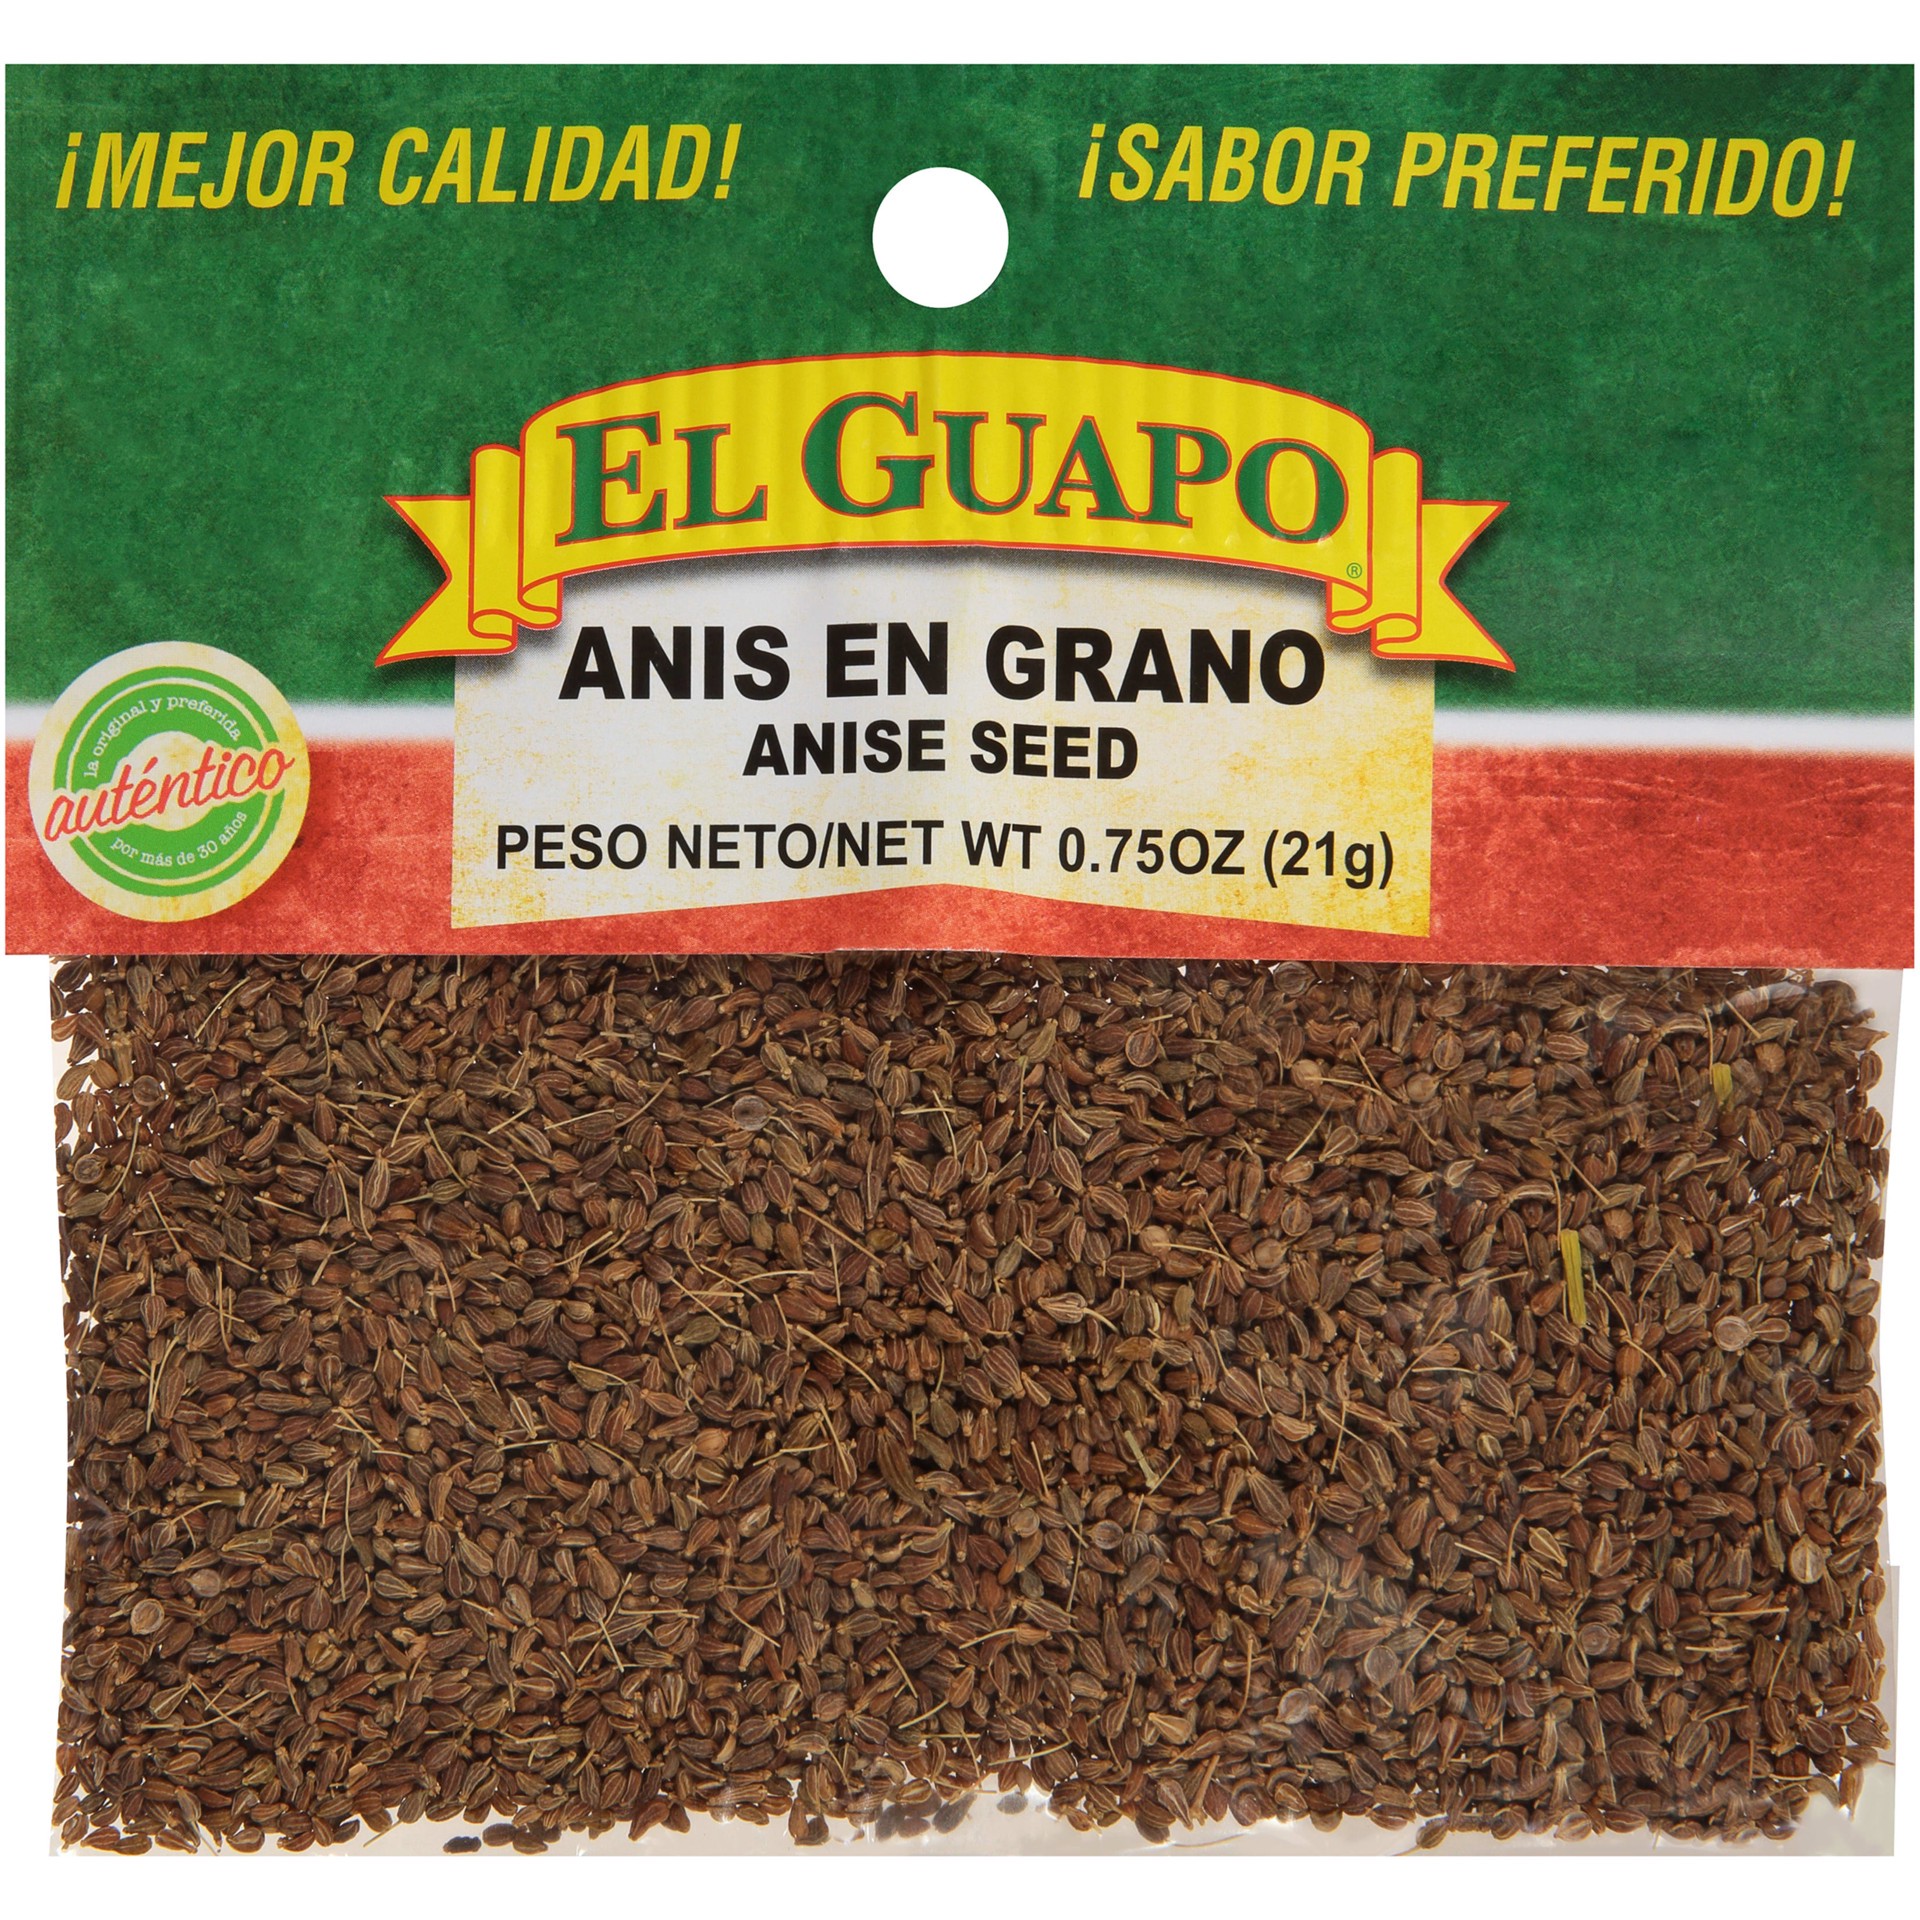 slide 1 of 4, El Guapo Anise Seed (Anise en Grano), 0.75 oz